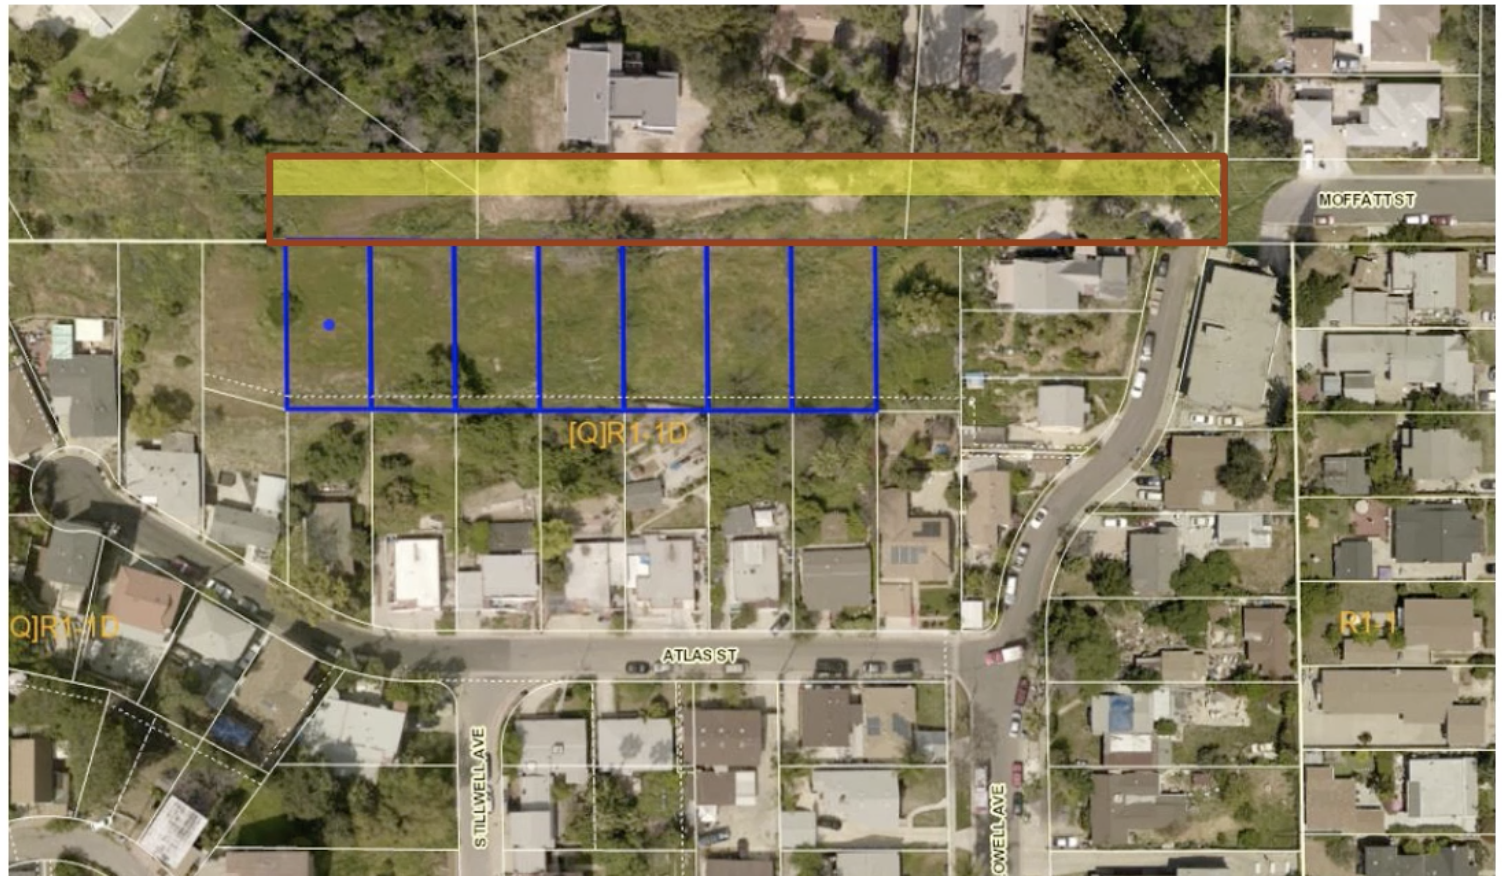 Thumbnail for City Council approves primary permit for Moffatt Street development despite community opposition